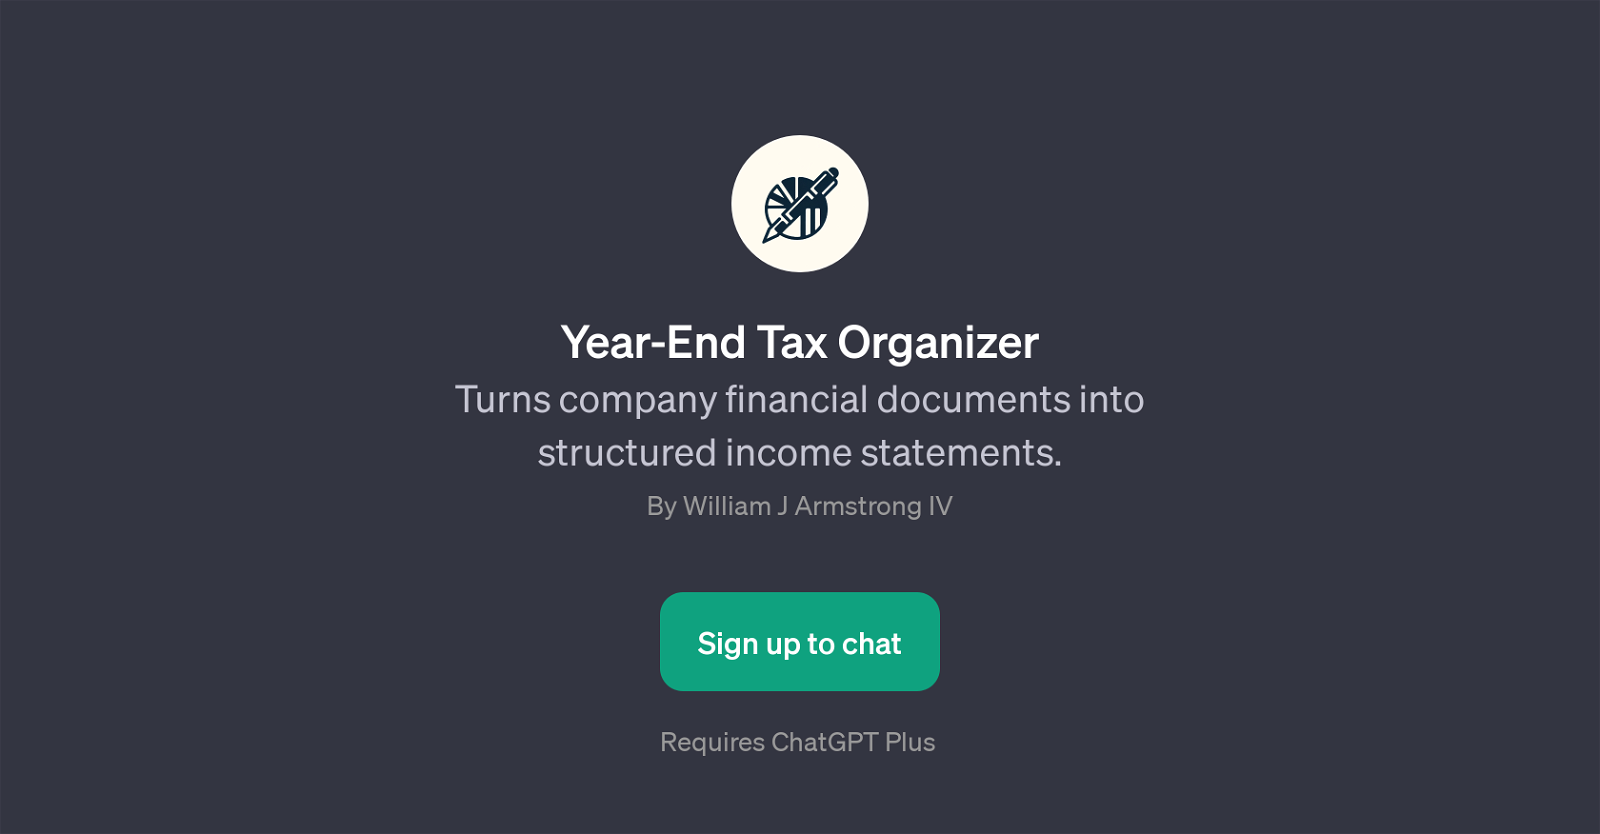 Year-End Tax Organizer website